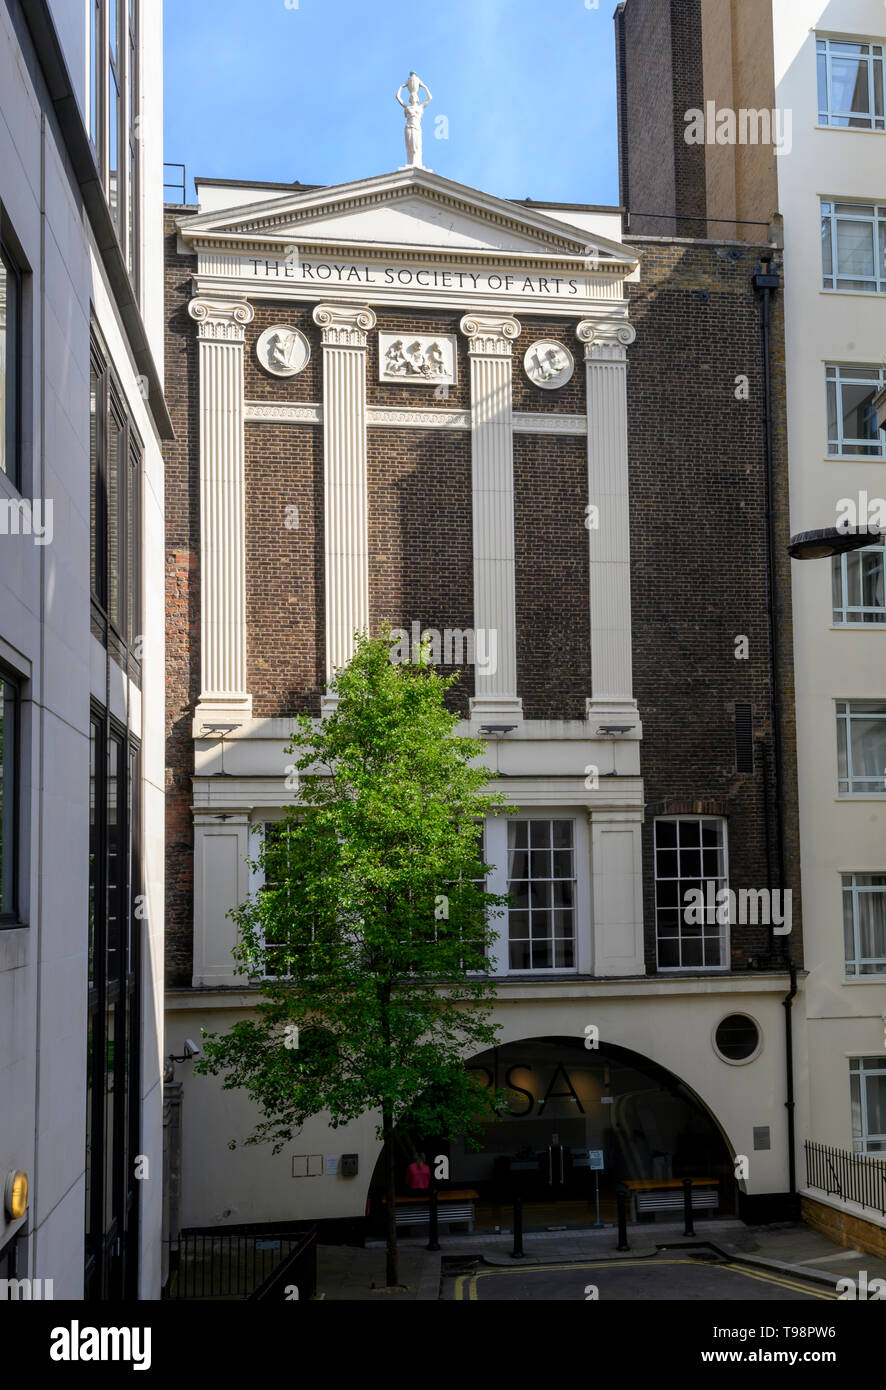 L'entrée et la façade de la Royal Society of Arts, John Adam Street, London, England, UK Banque D'Images